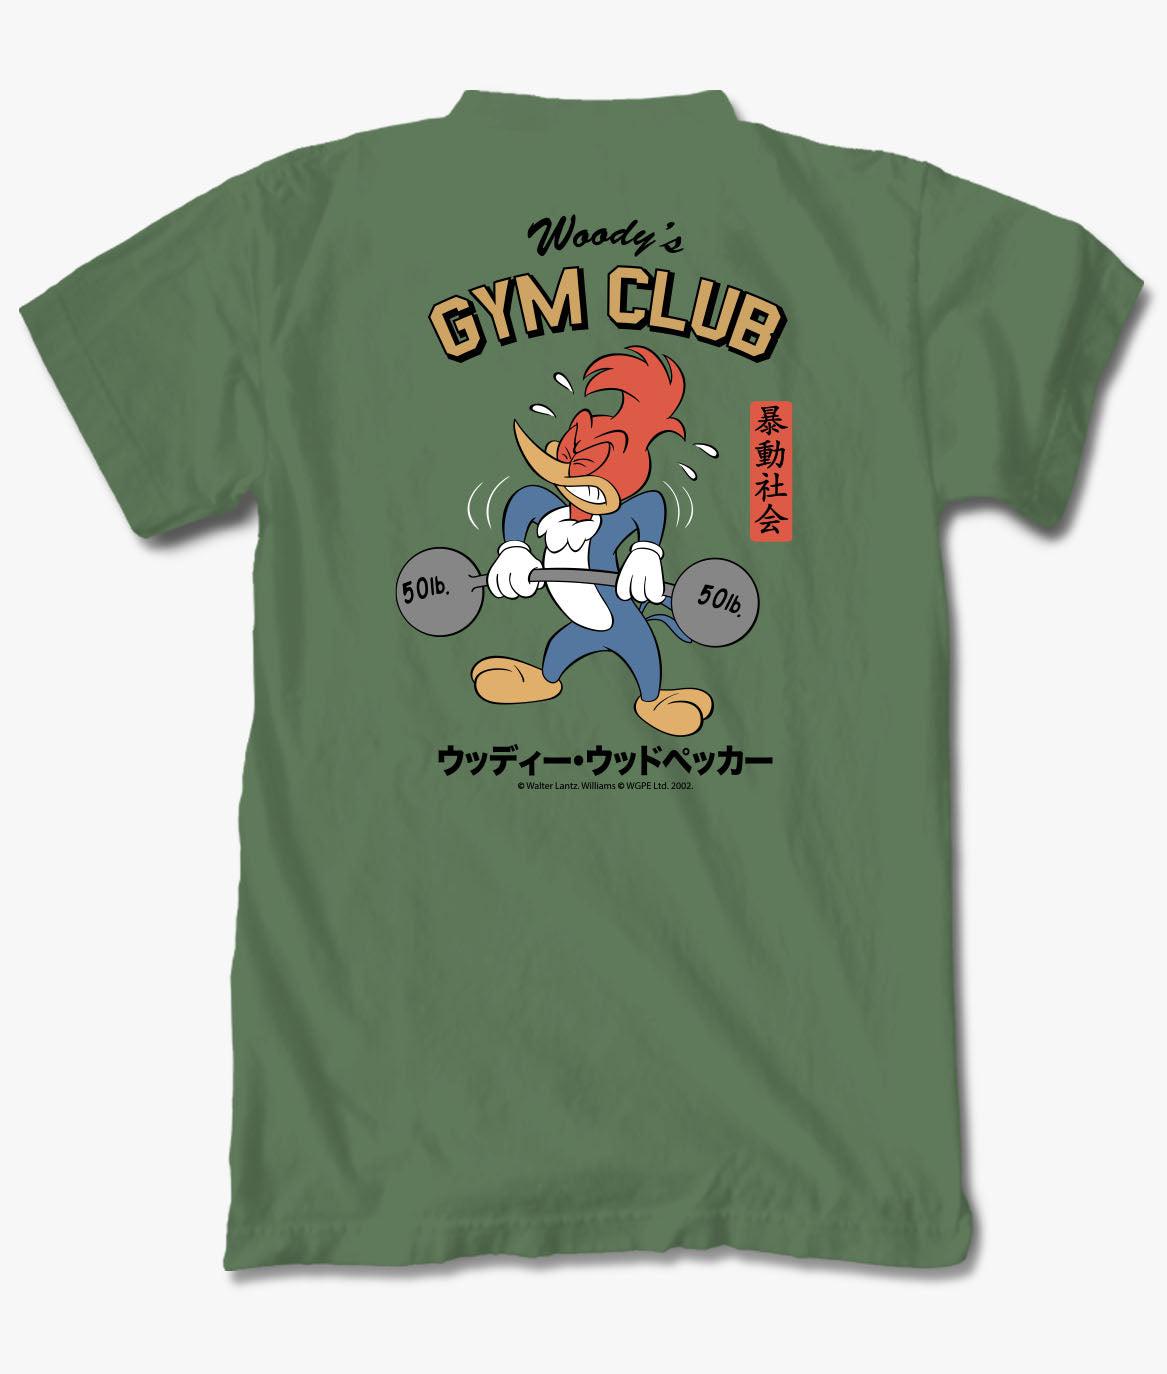 Image of Woody Woodpecker's Gym Club Mens T-Shirt